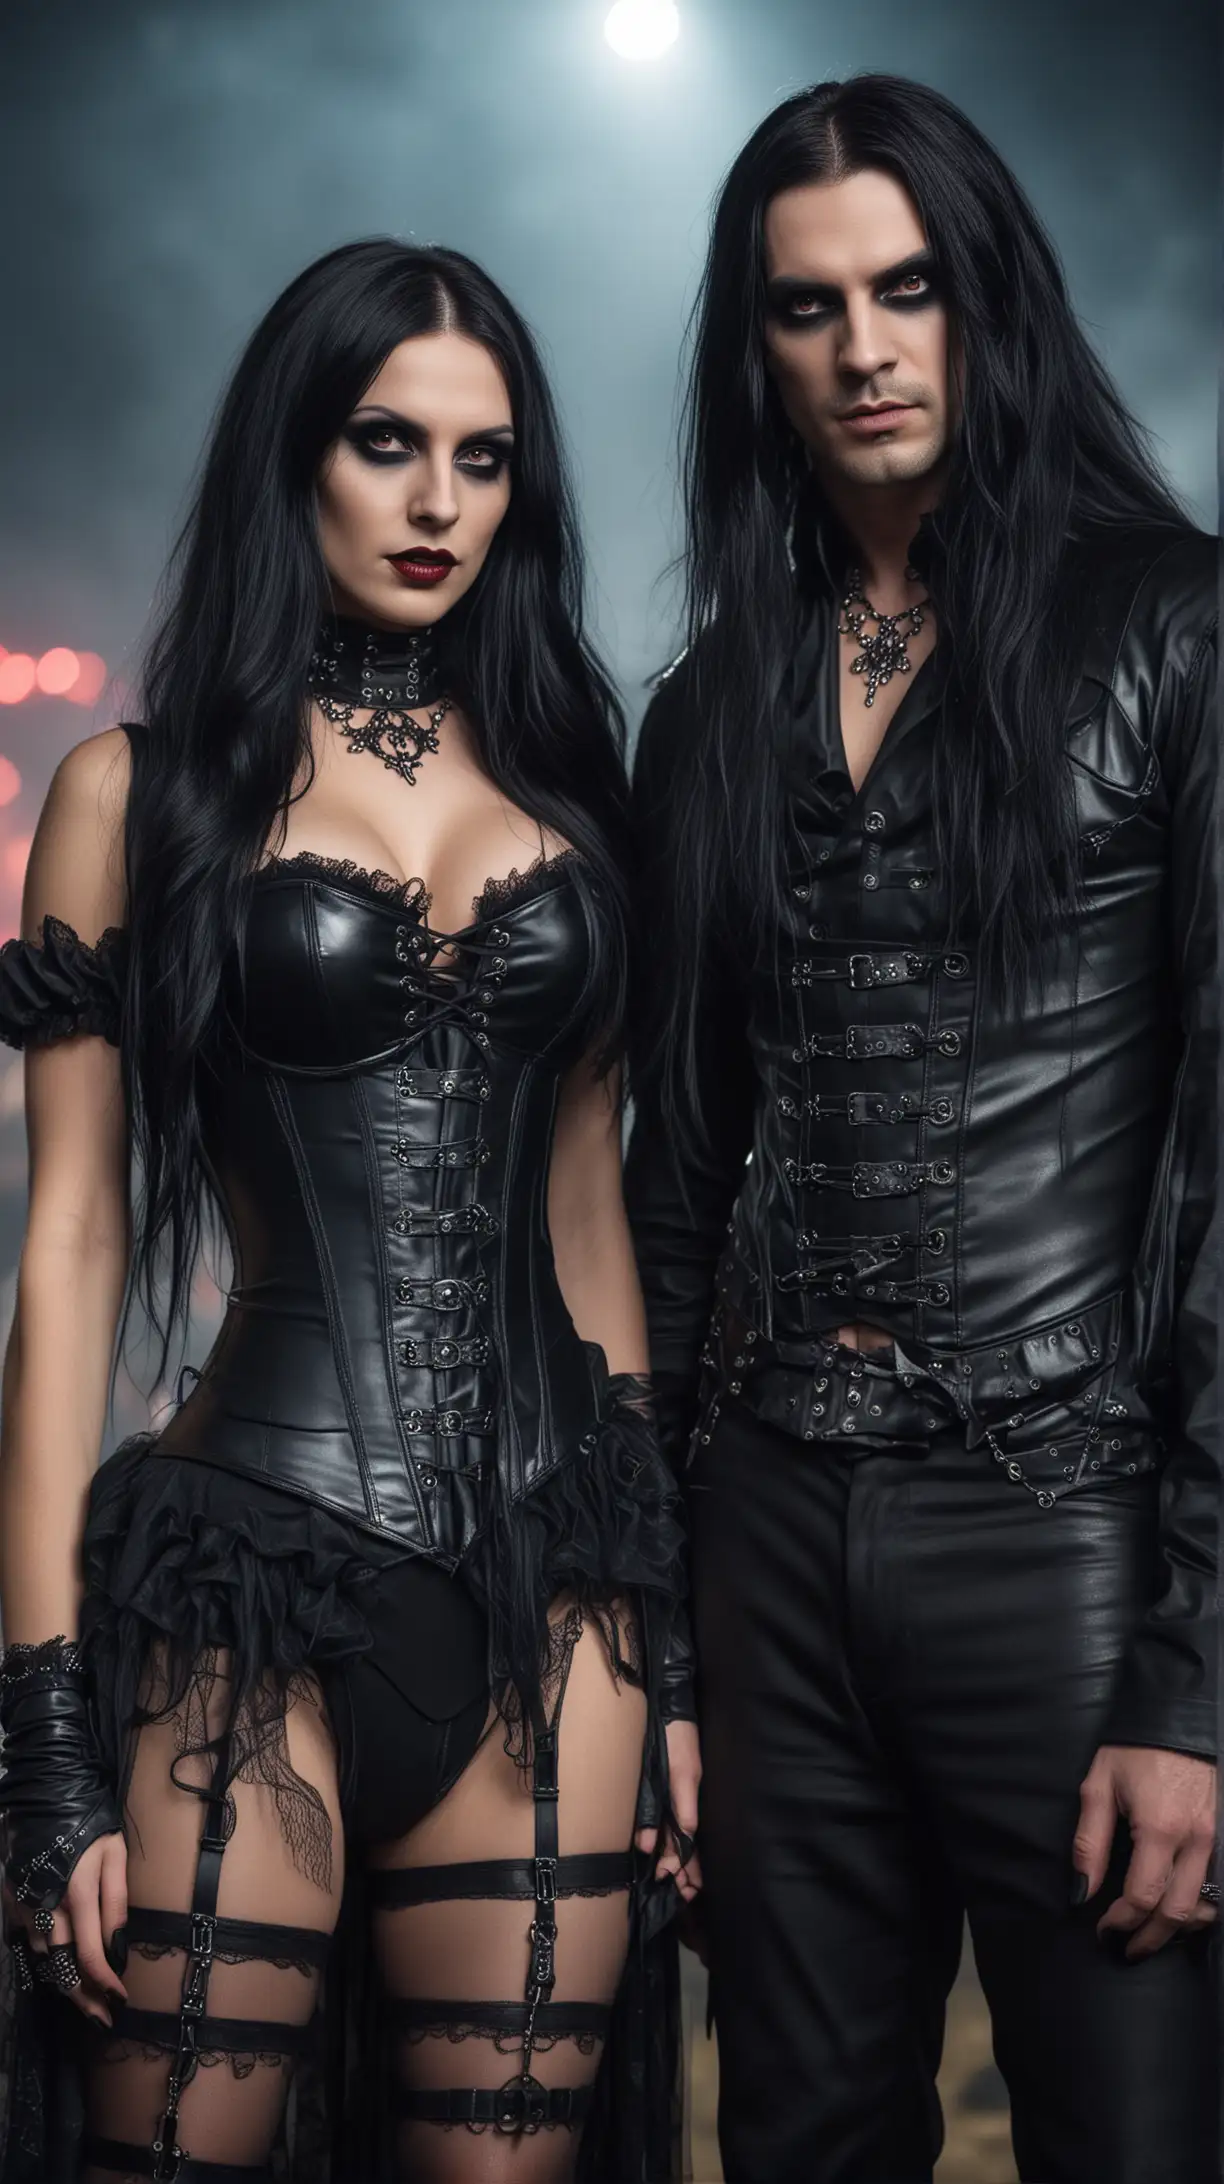 gothic man and woman, Long black hair, smokey eye make up, long black nails, latex corset, they are at a rock festival at night, vampire ispired look. 